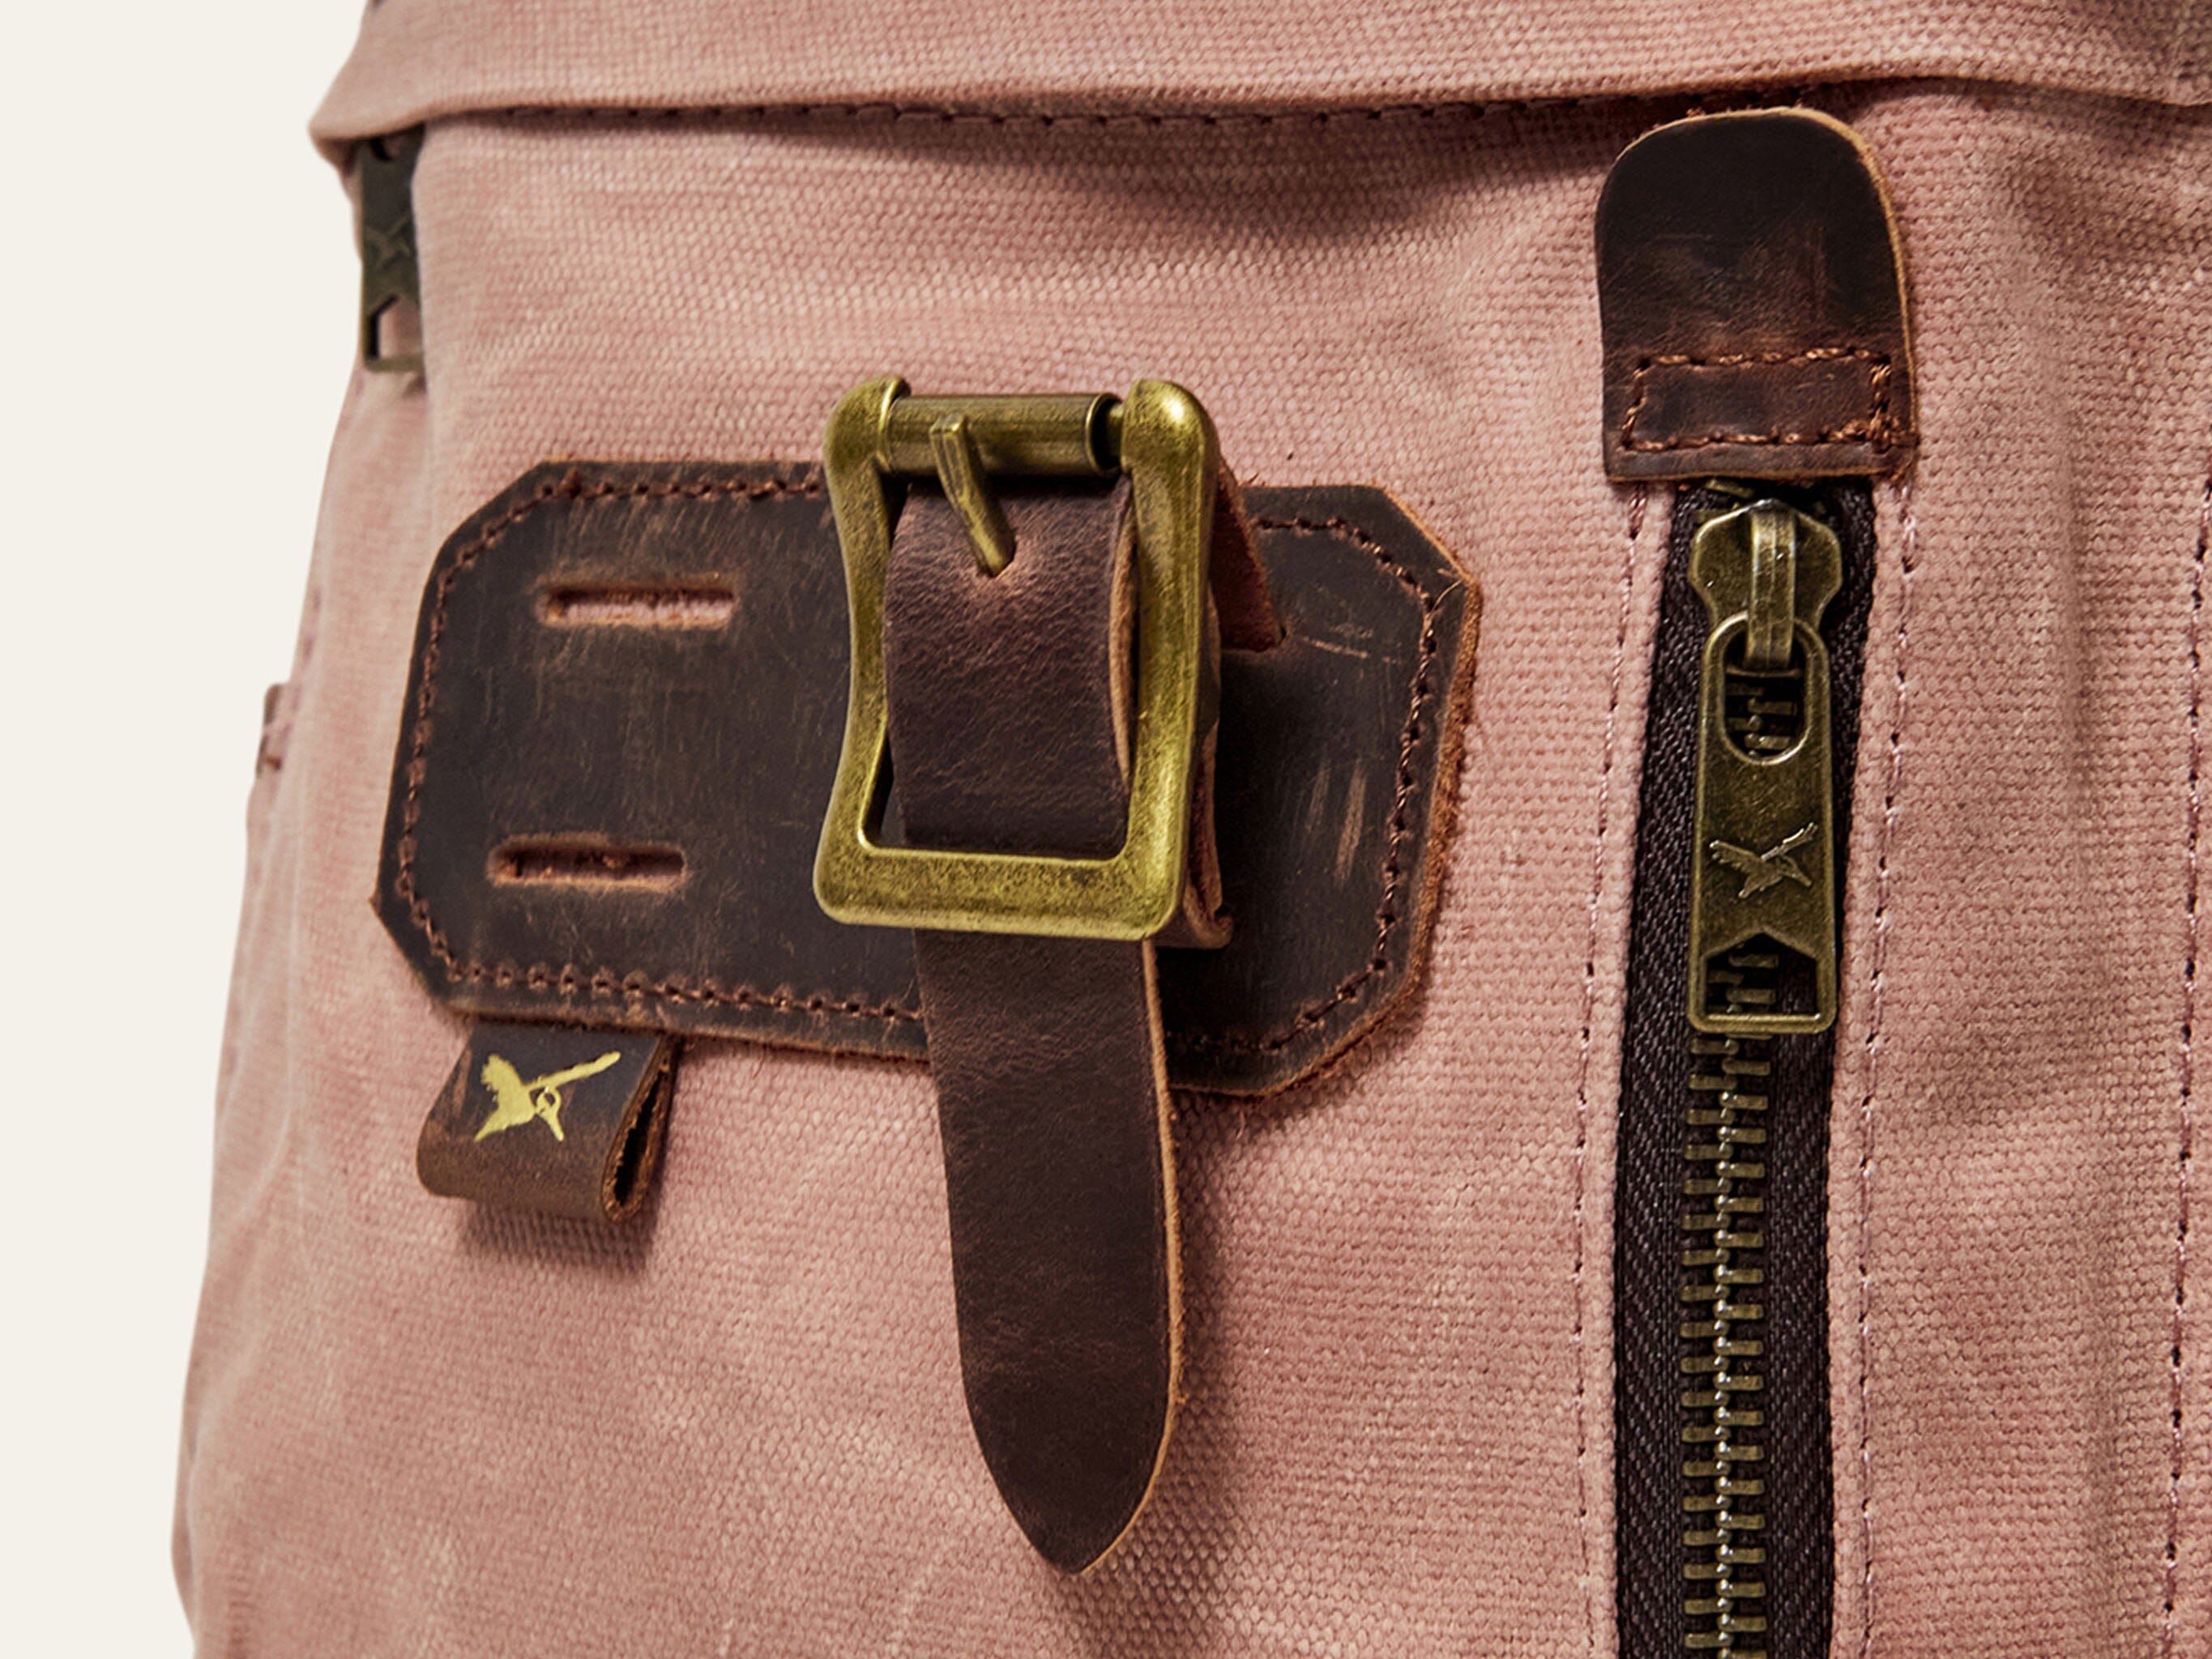 Dusty Pink Waxed Cotton Mini Bali Backpack